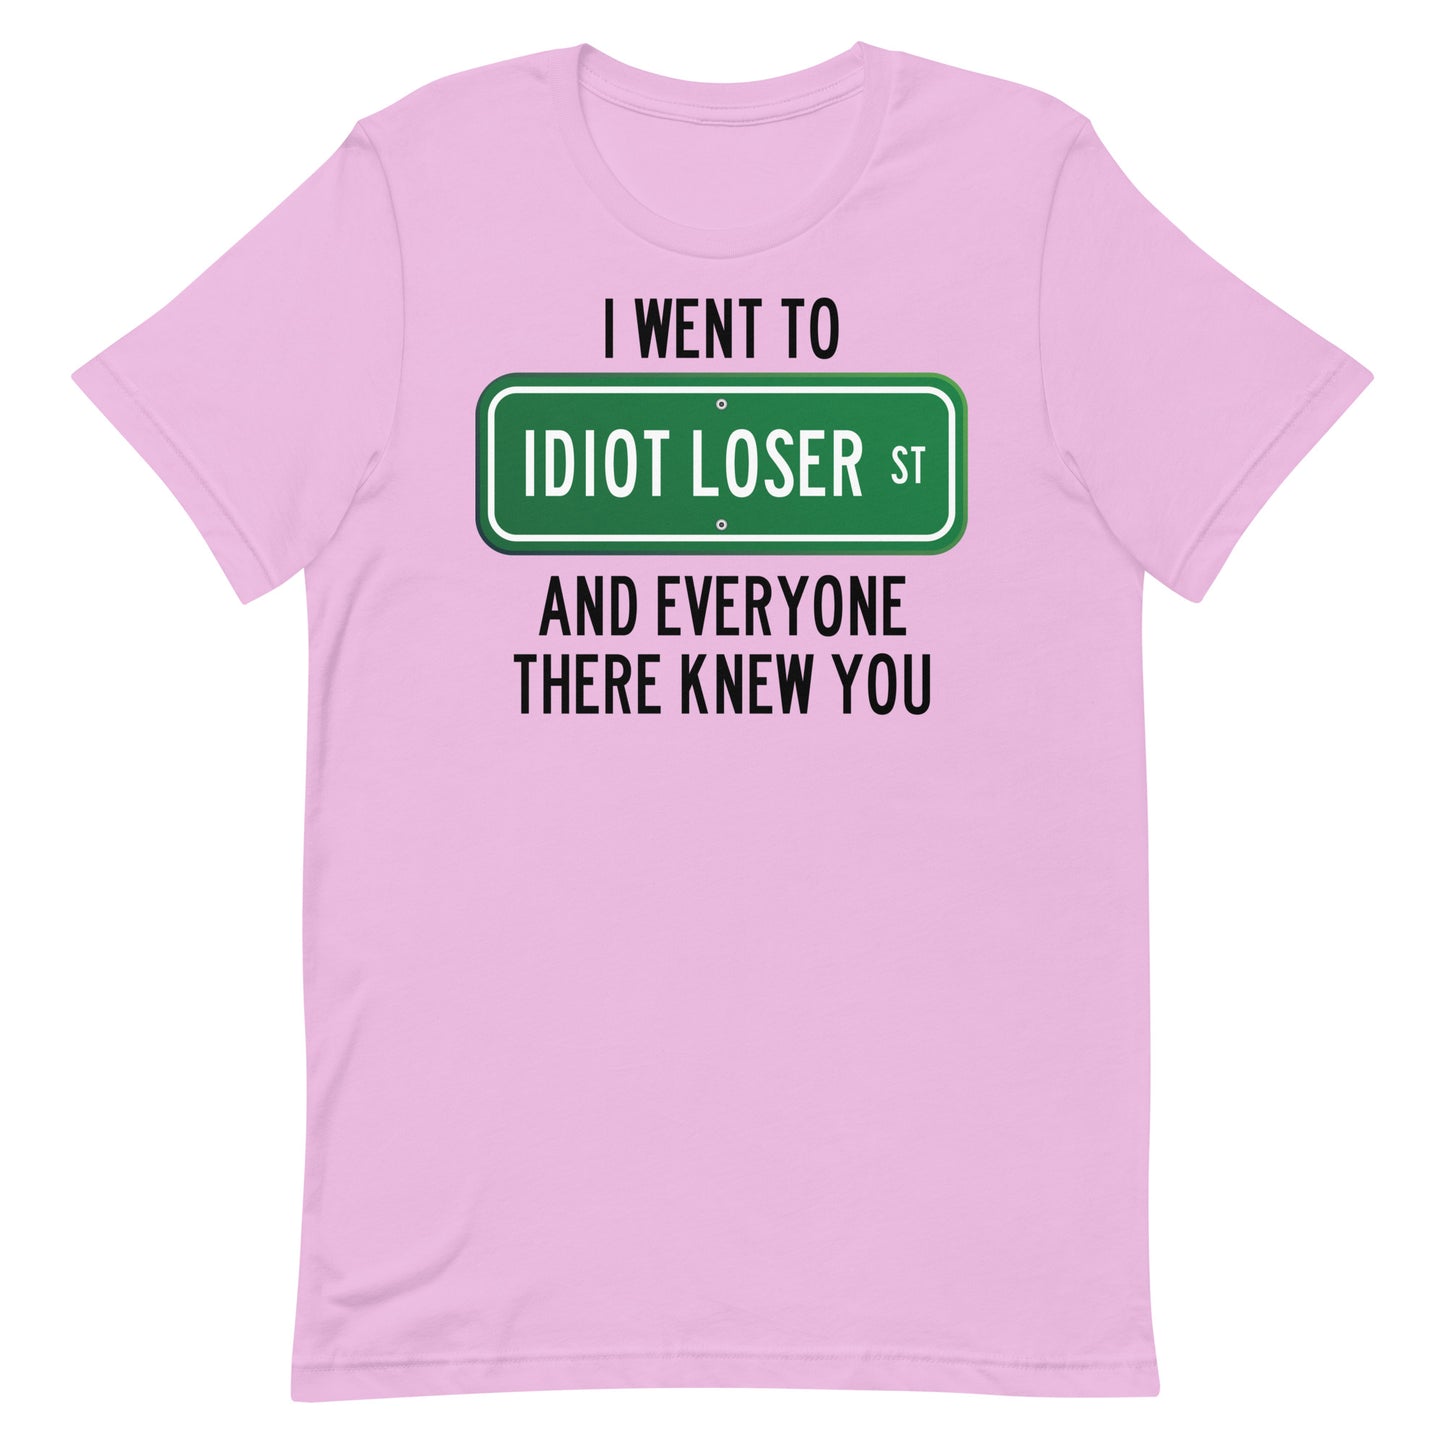 Idiot Loser St Unisex t-shirt